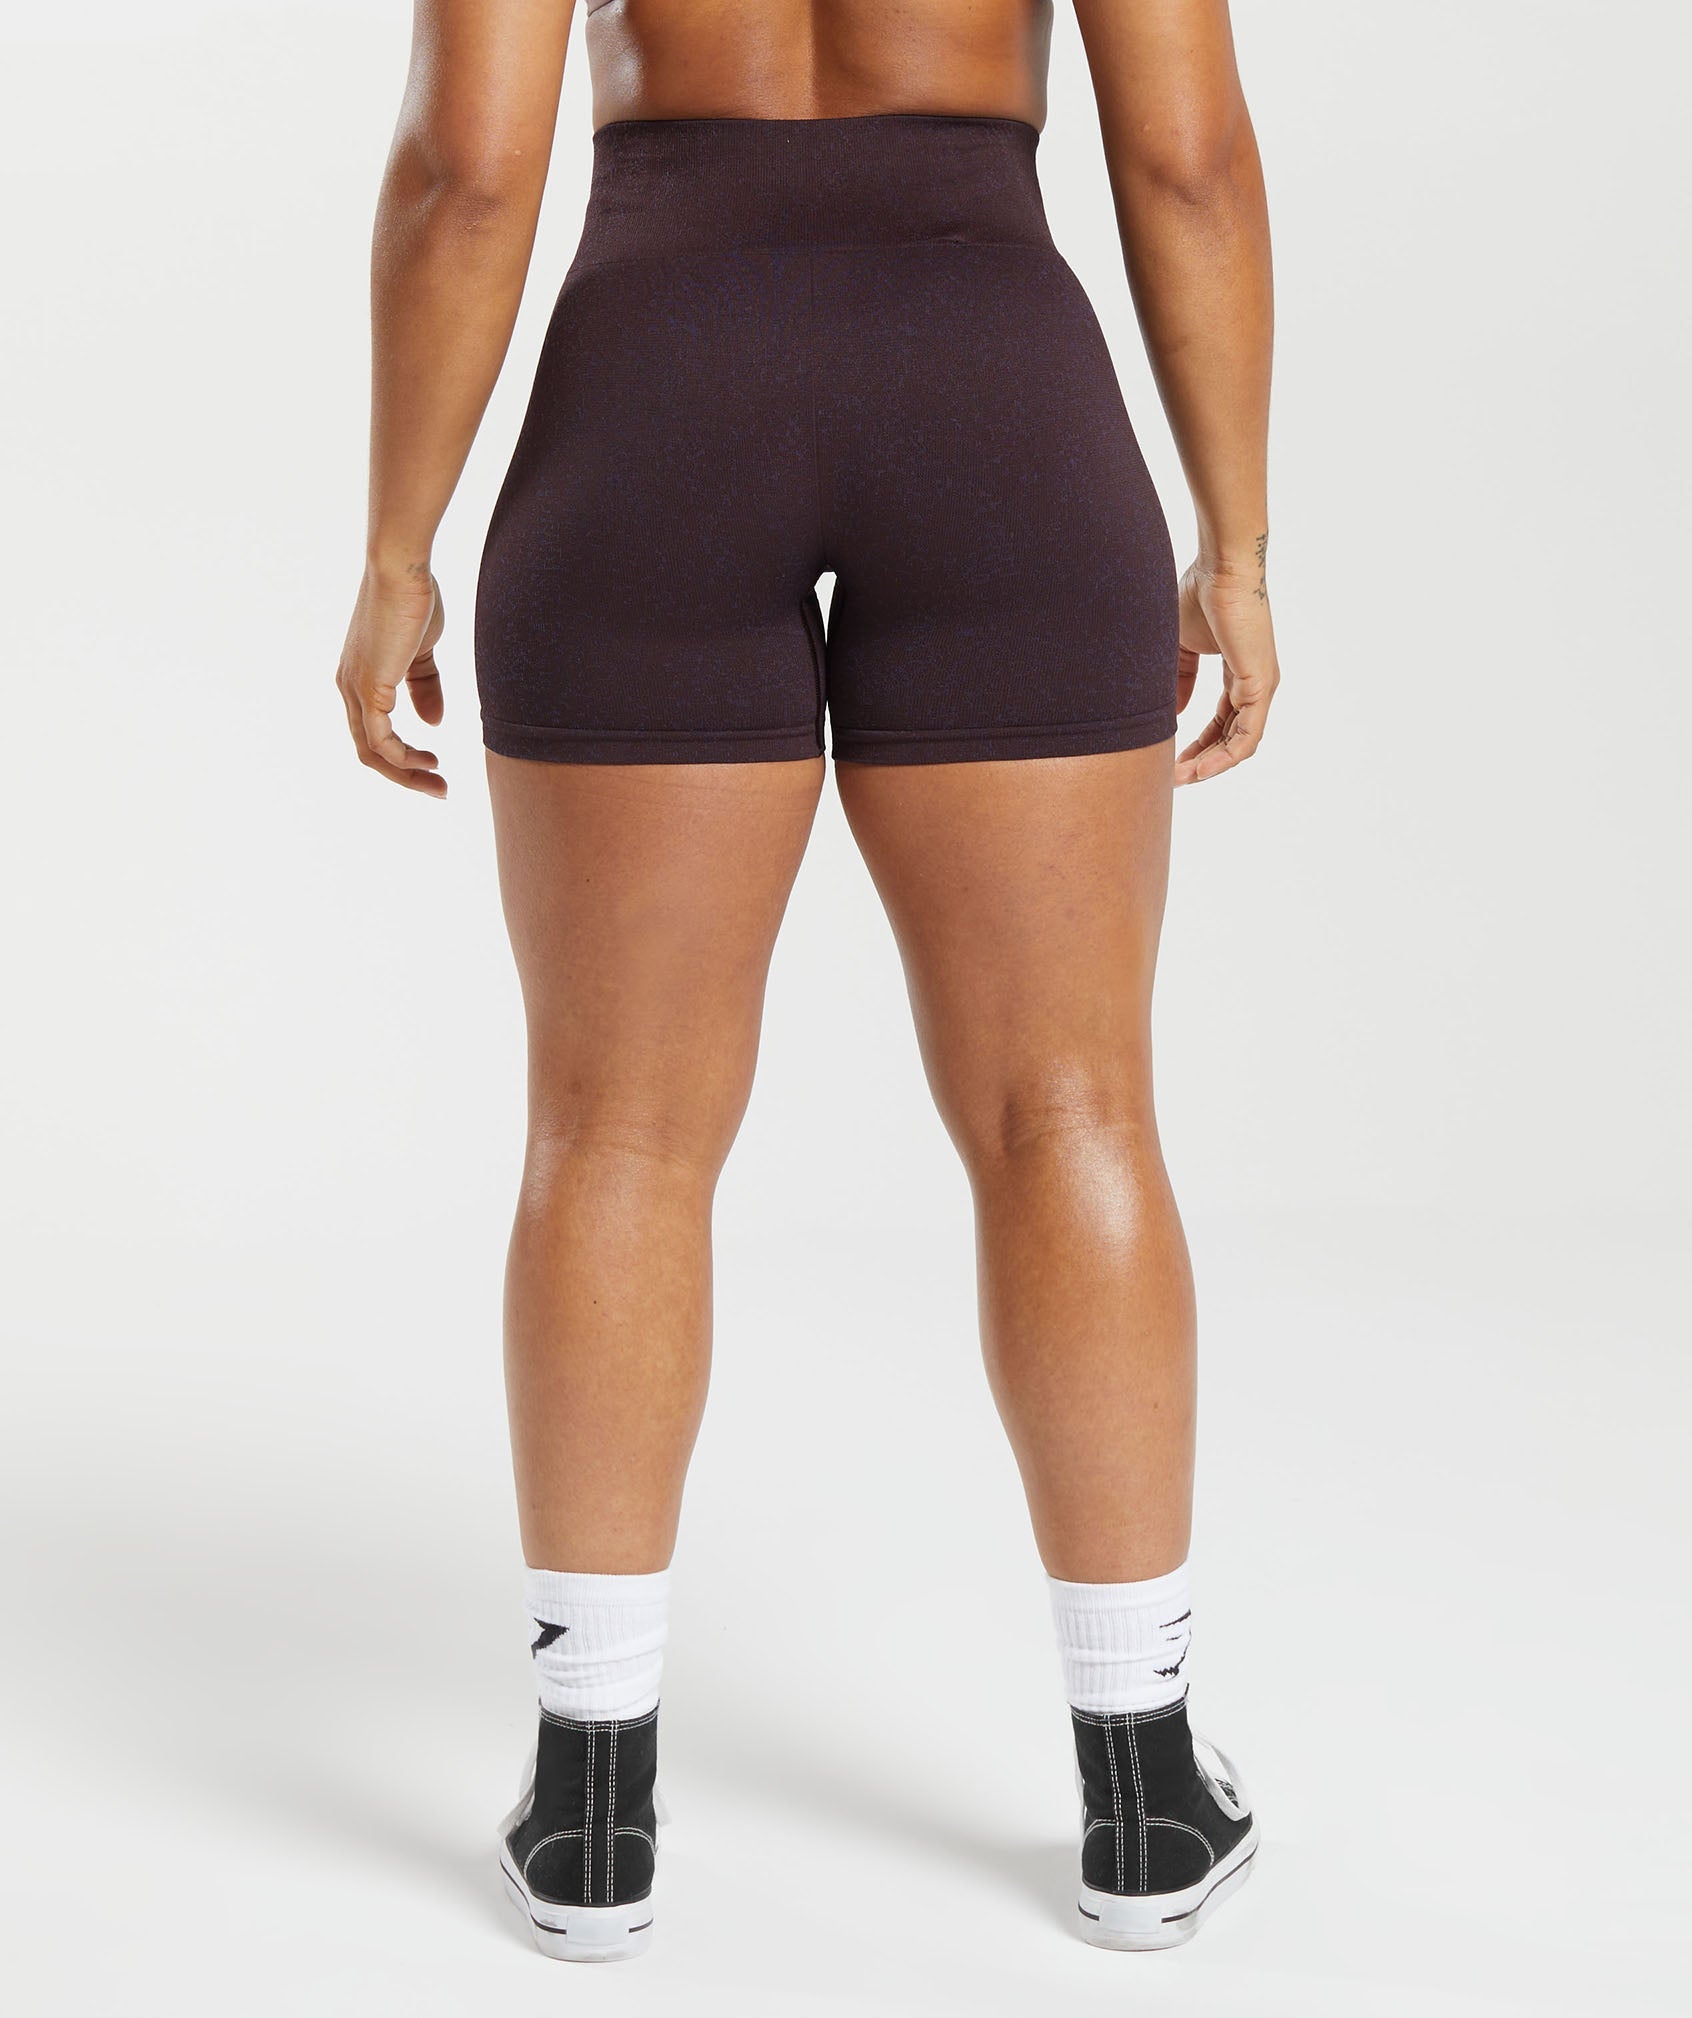 Adapt Fleck Seamless Shorts in Plum Brown/Dewberry Purple - view 2